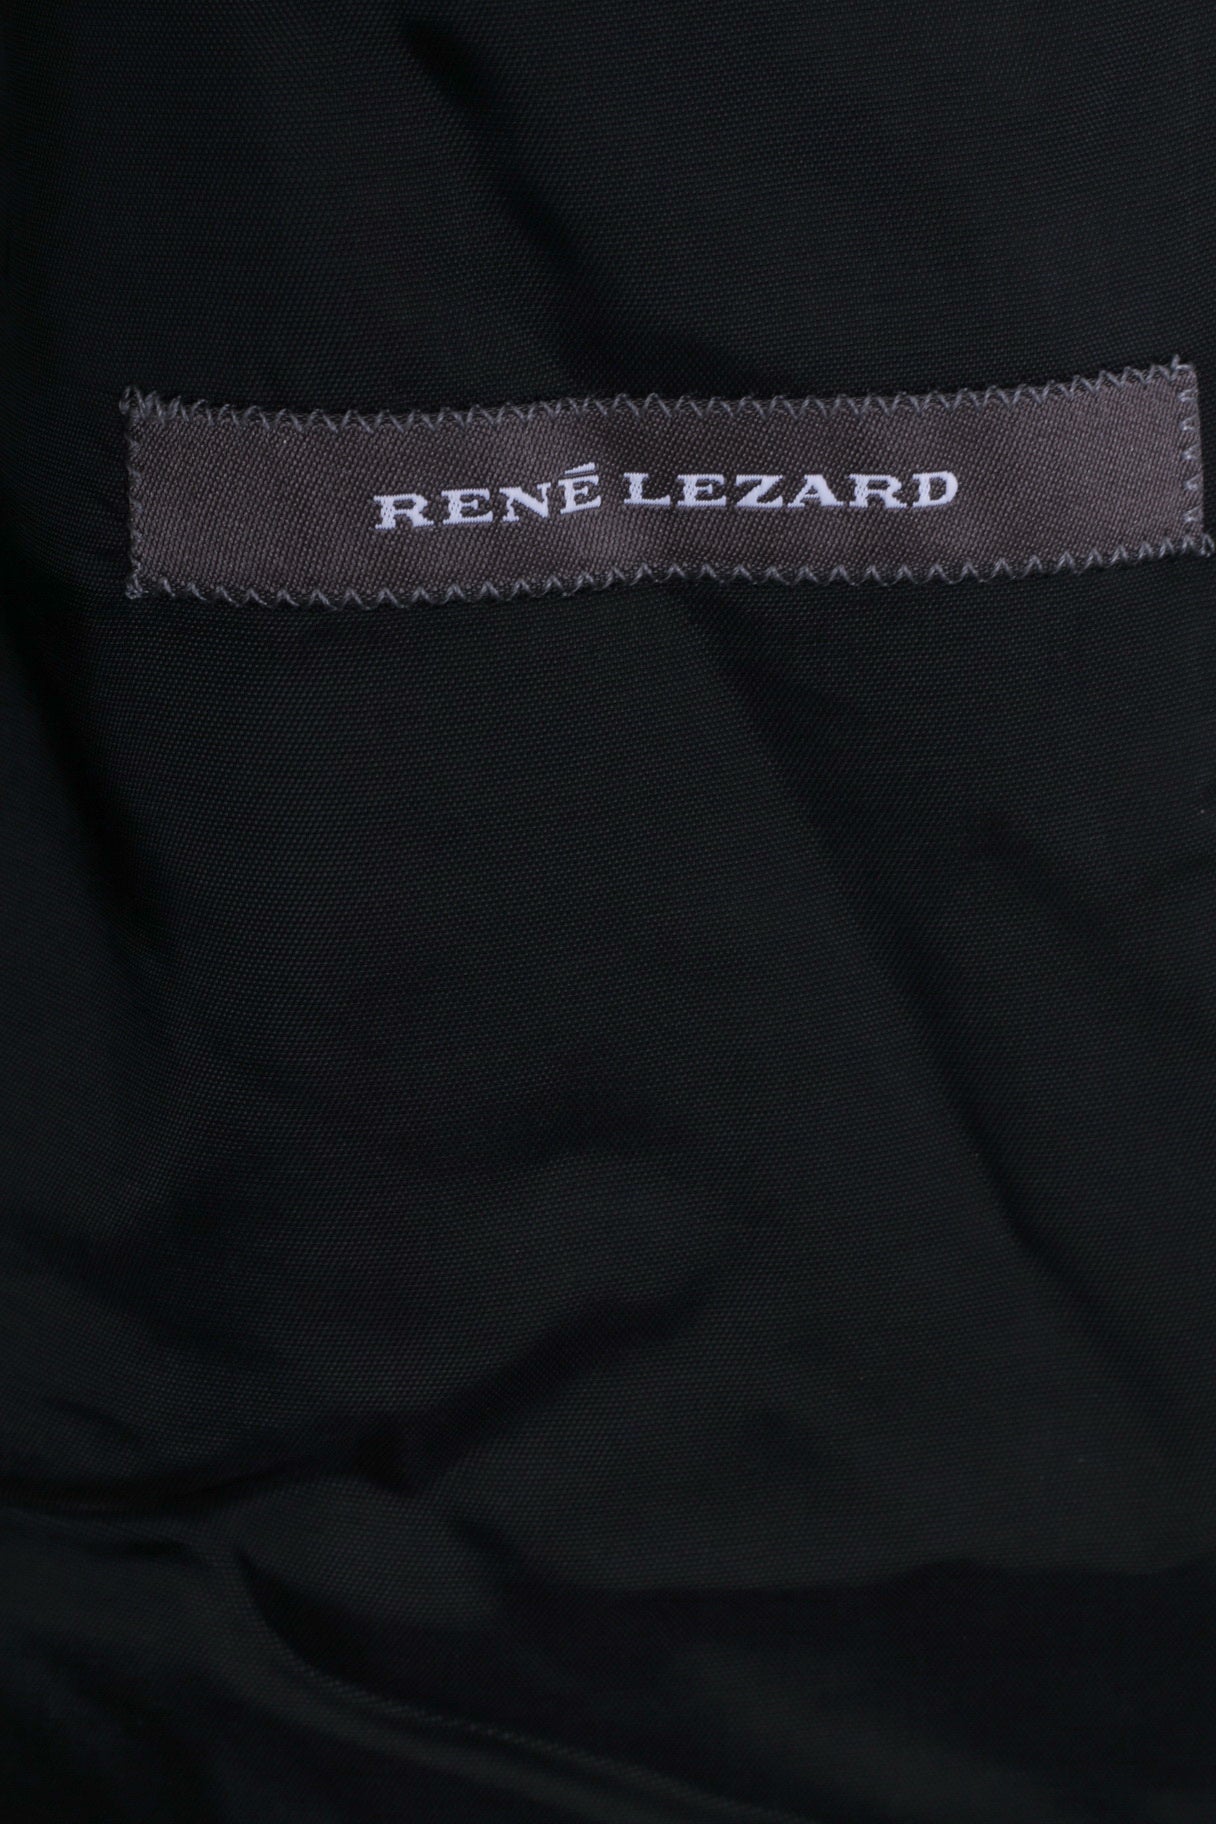 Giacca blazer da uomo Rene Lezard 98 (S) nera monopetto in lana 